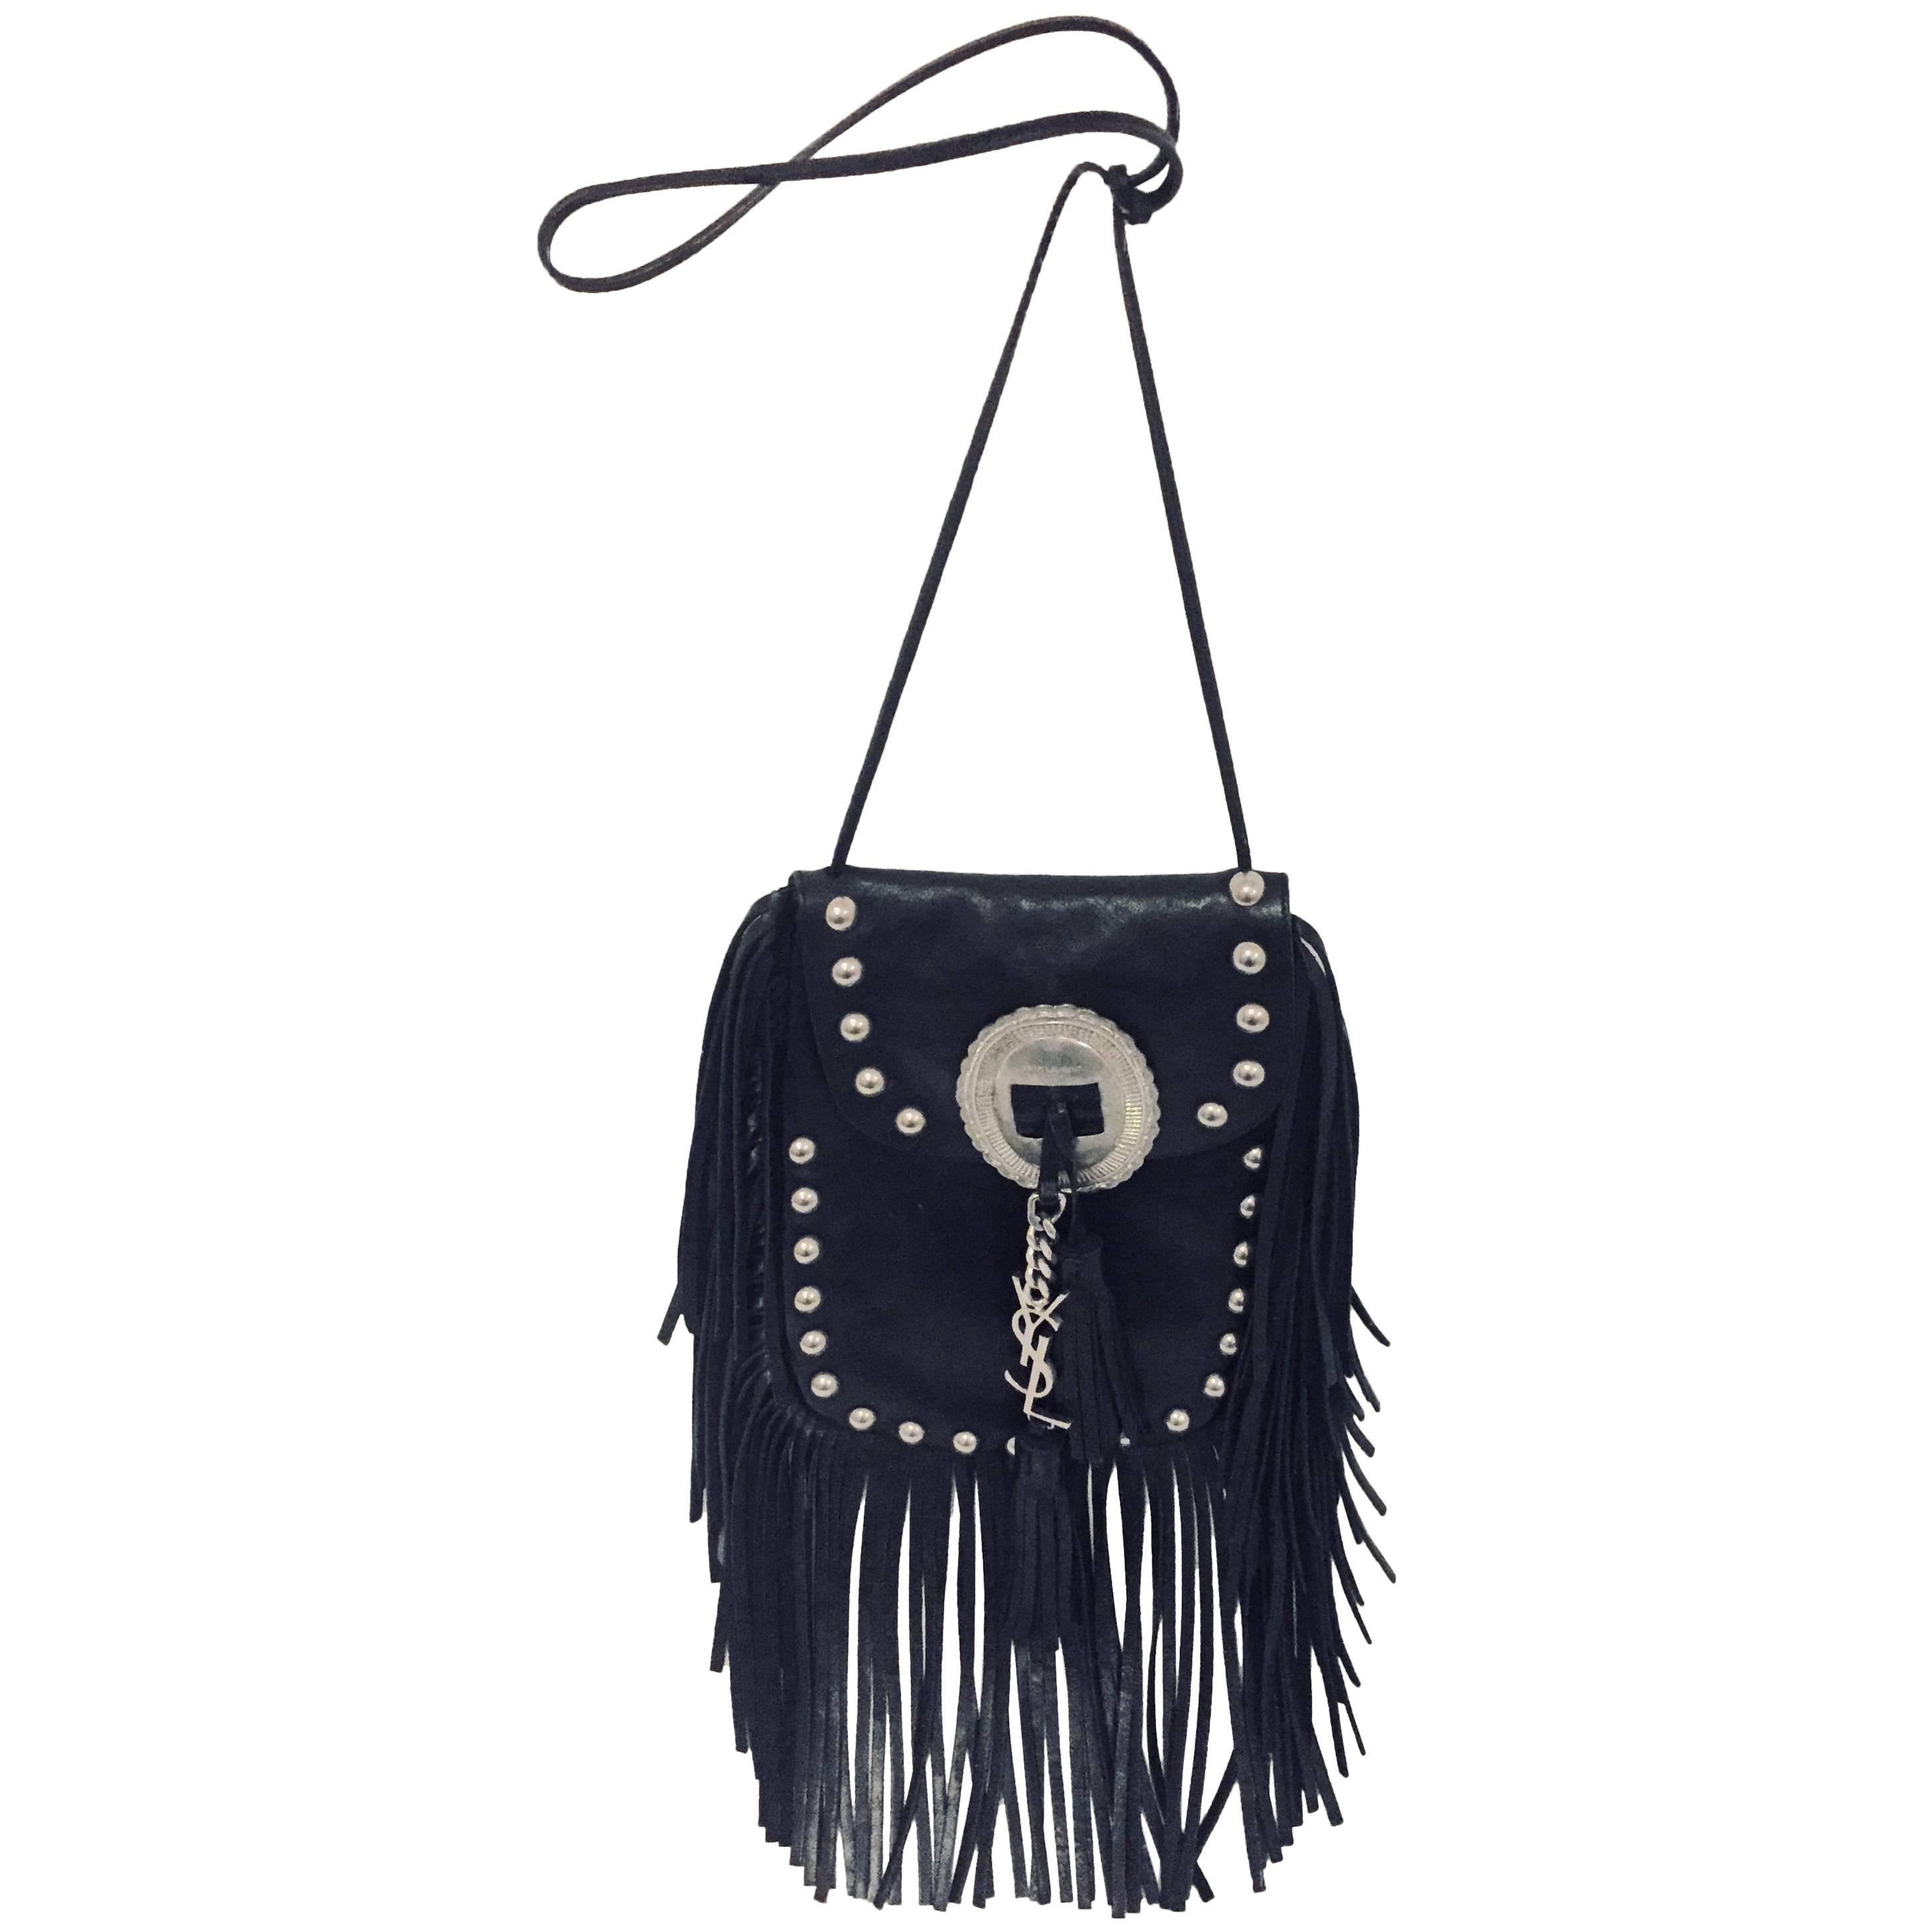 Singular Saint Laurent Black Anita Flat Leather Bag with Fringe